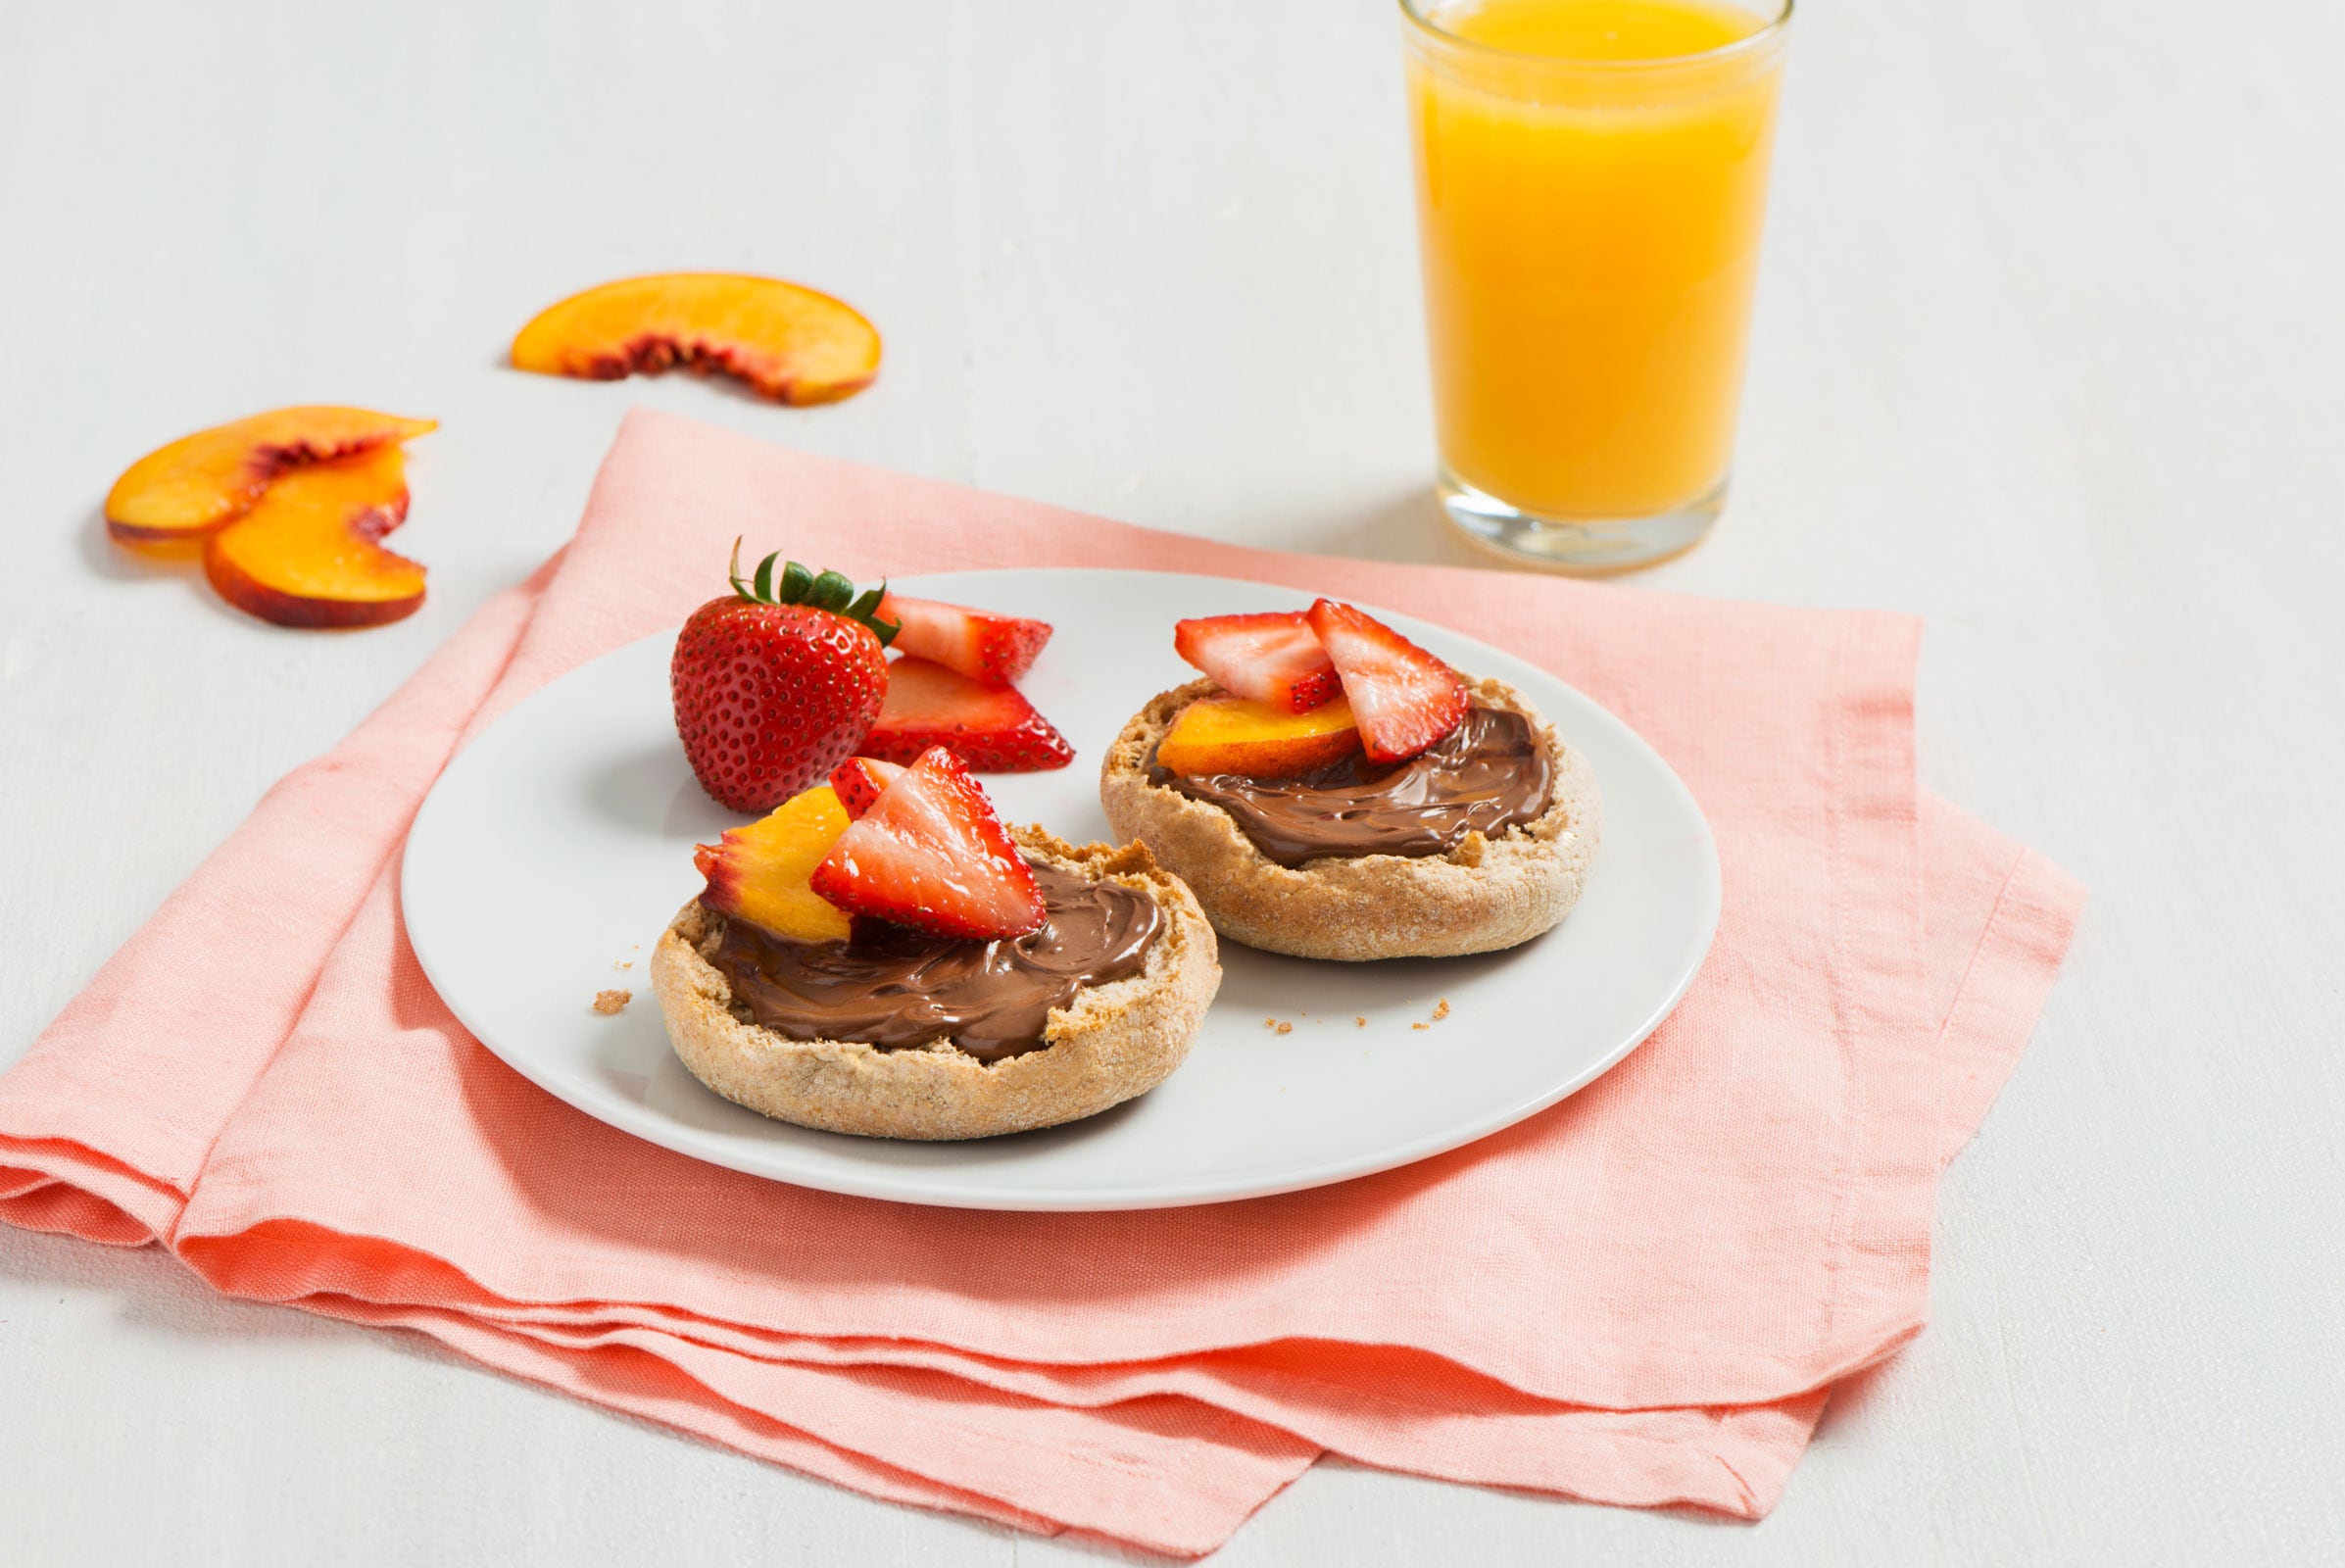 Strawberry Peach English Muffins with Nutella® hazelnut spread